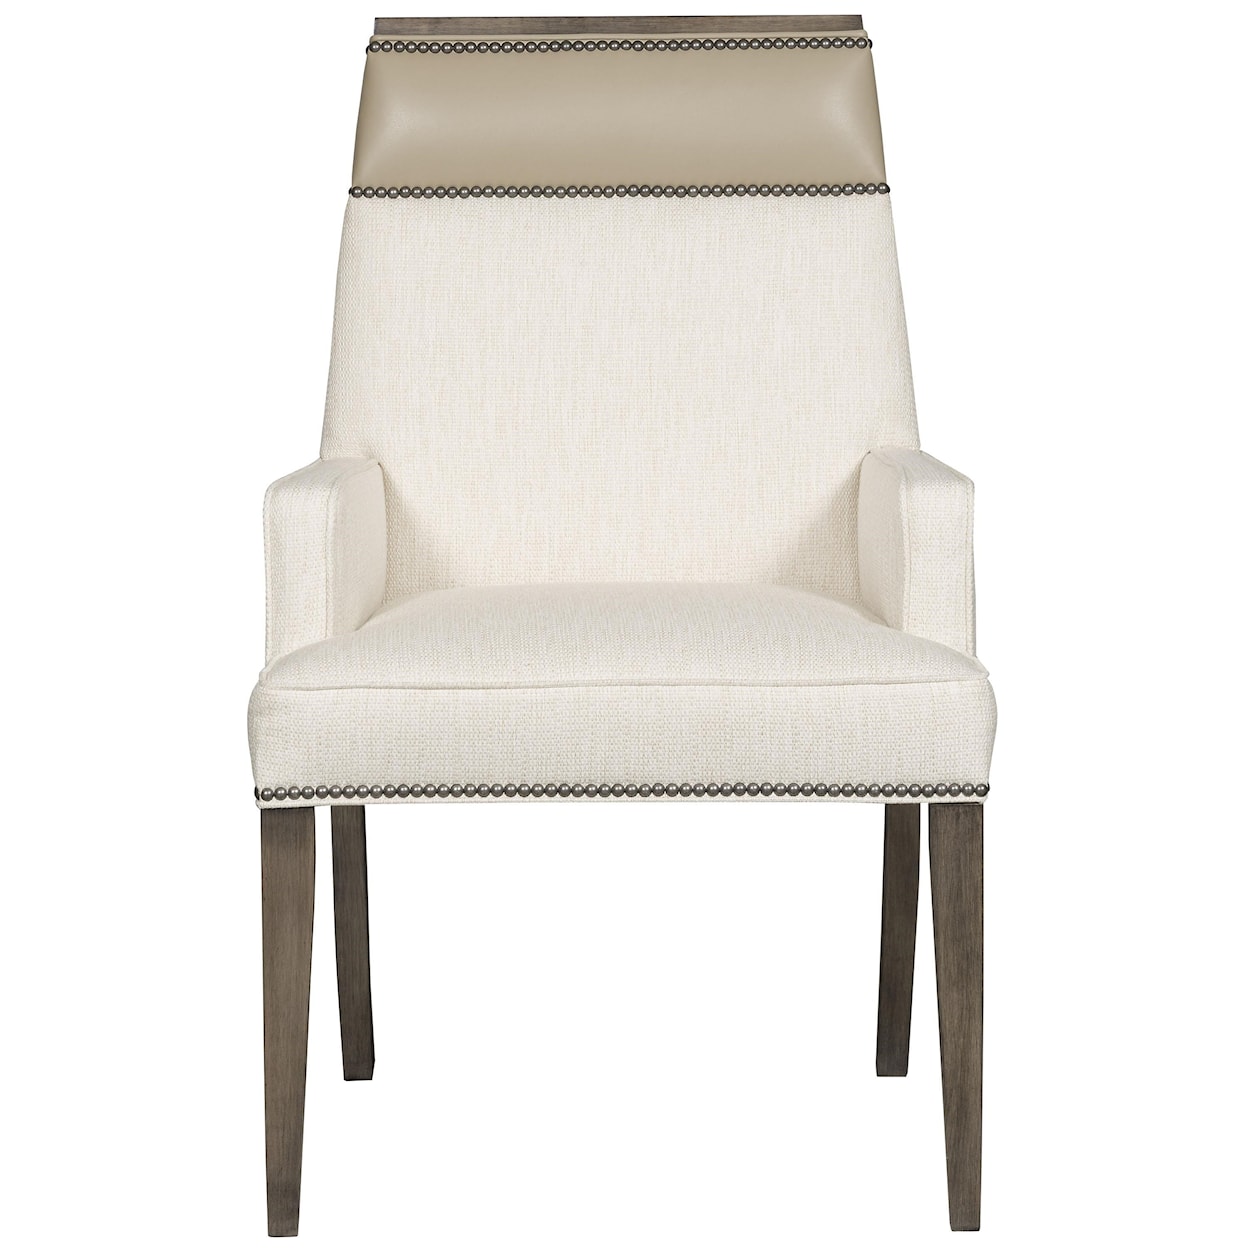 Vanguard Furniture Bradford Arm Chair